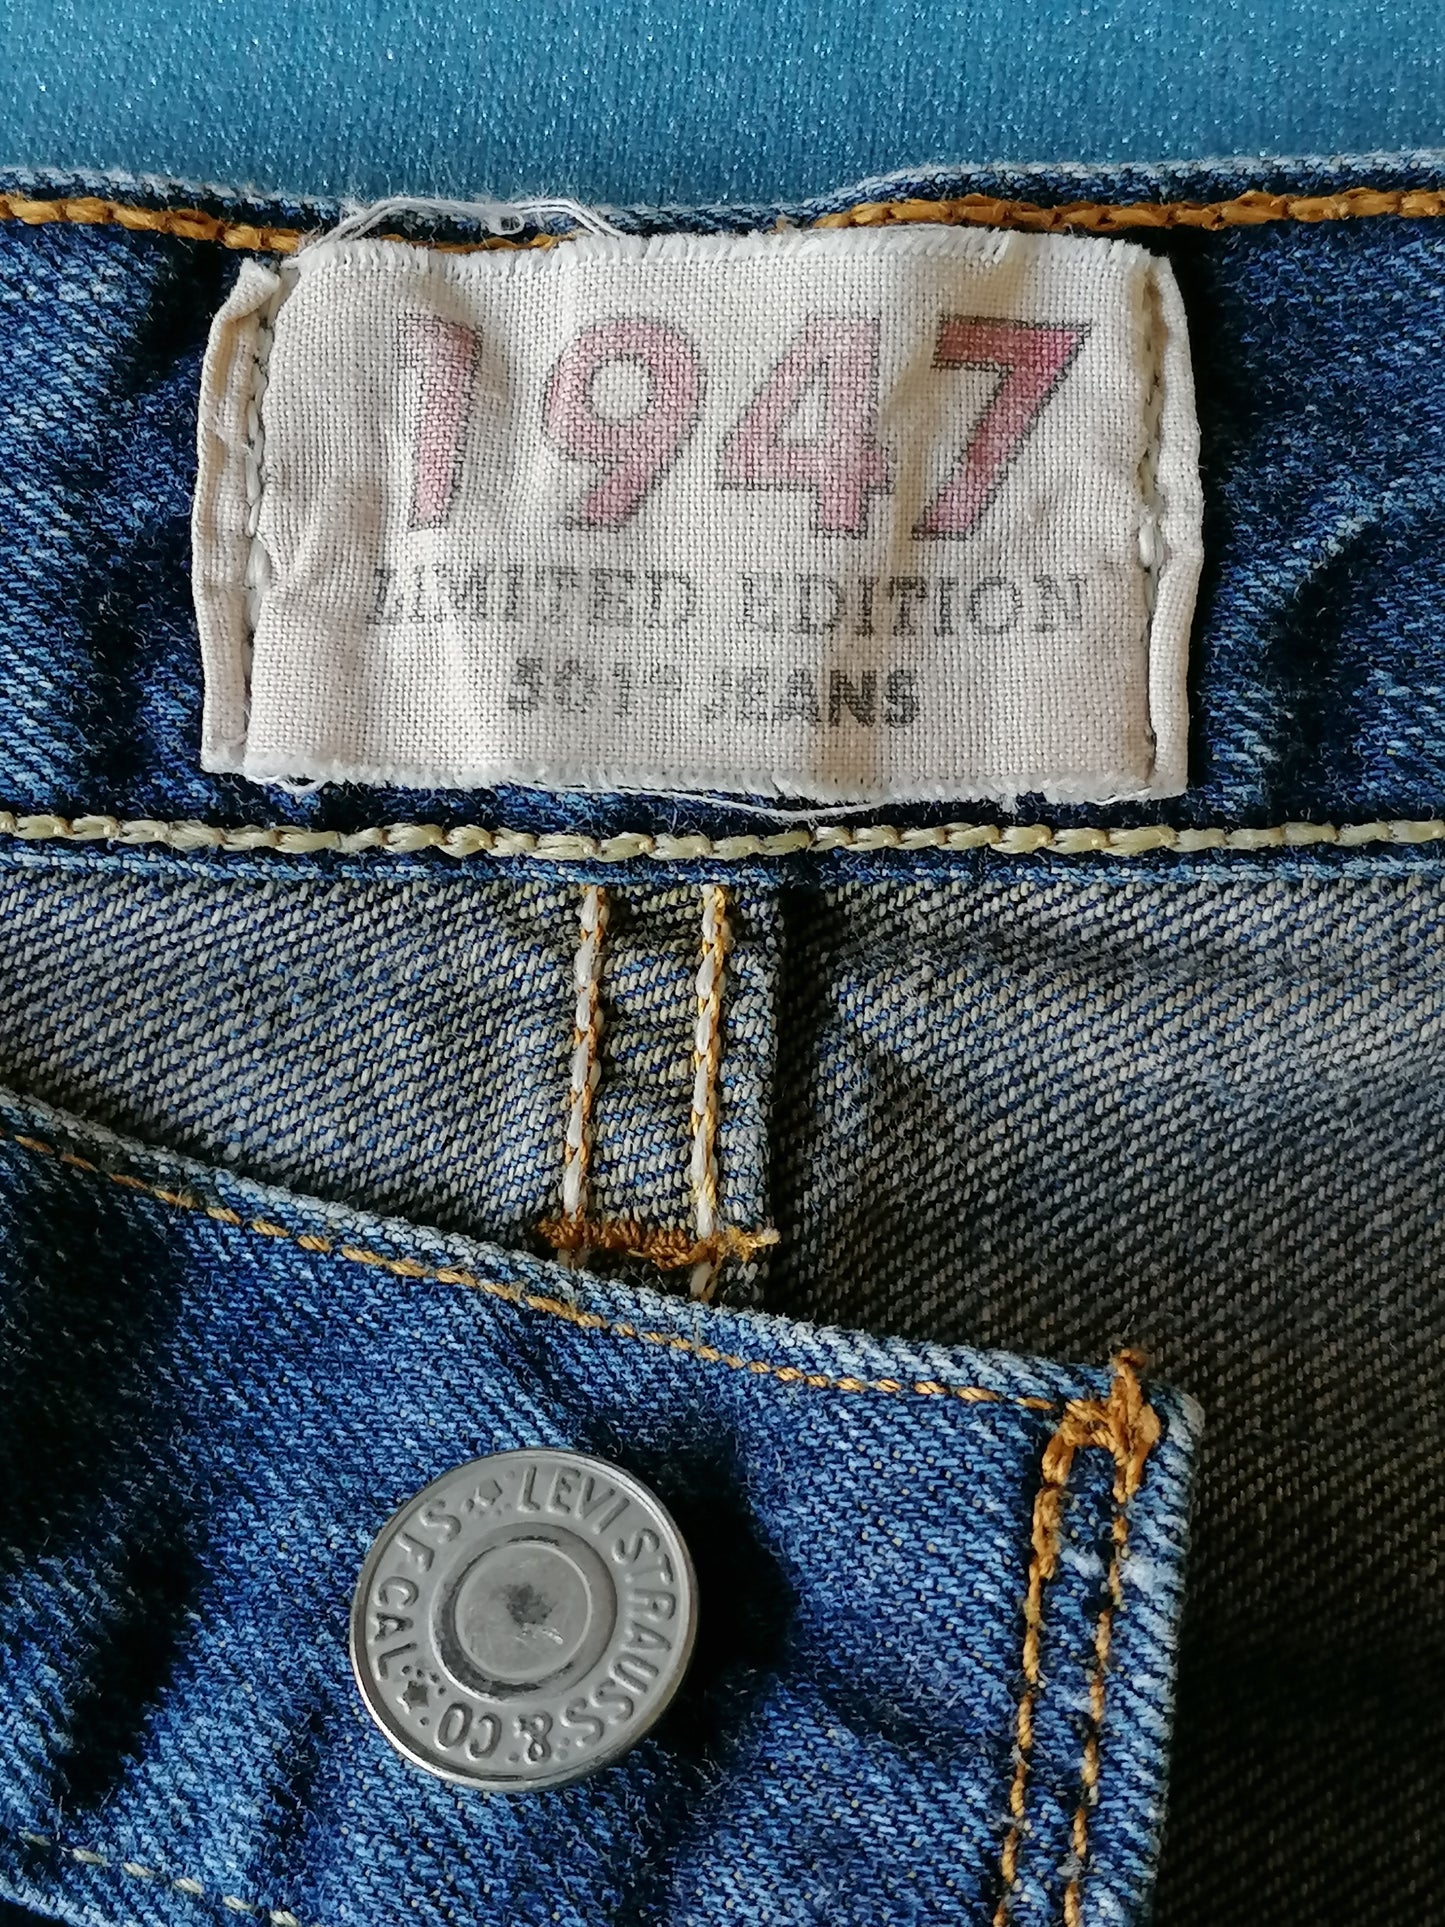 Los jeans 501 de Levi. 1947 LIMITADO. Azul de color. W32 - L30.